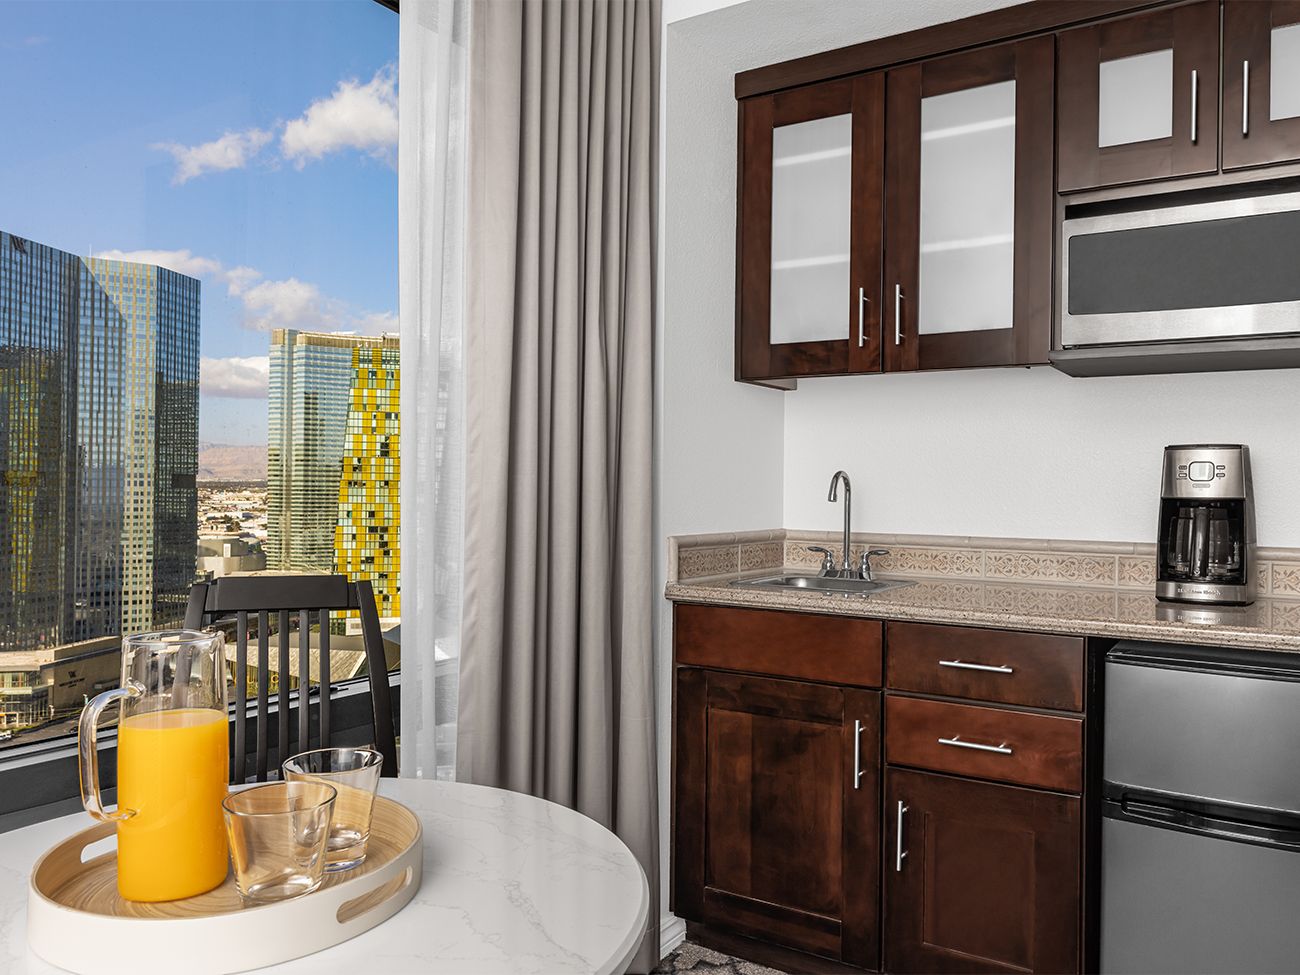 Marriott Chateau: Las Vegas' Grandest Resort - Fidelity Real Estate